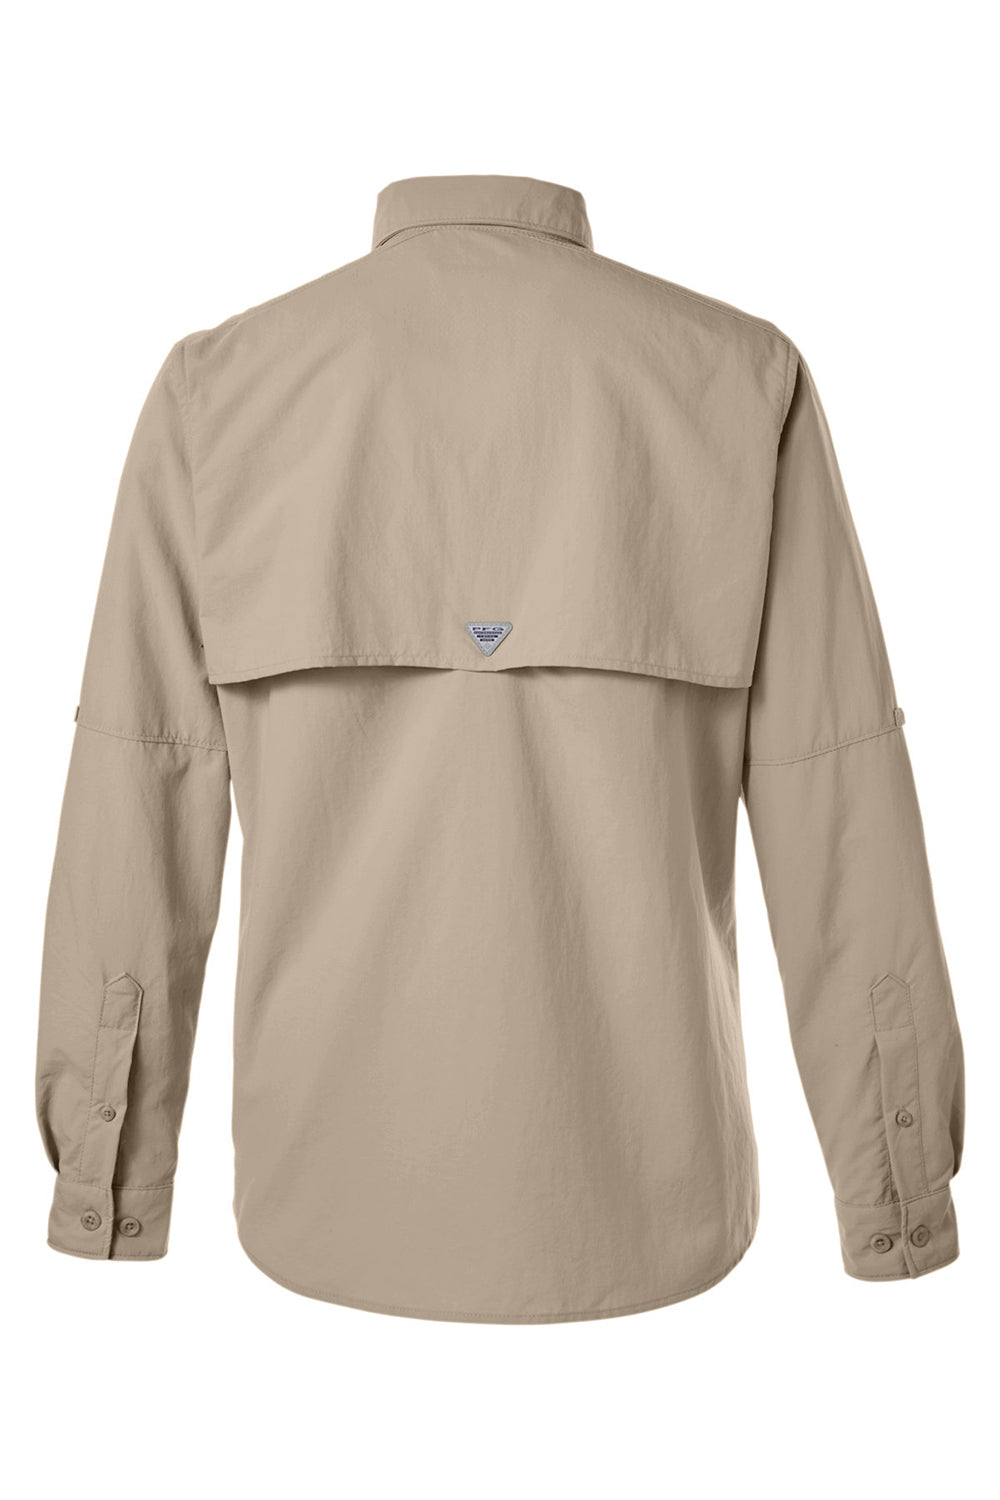 Columbia 7314 Ladies' Bahama Long-Sleeve Shirt M